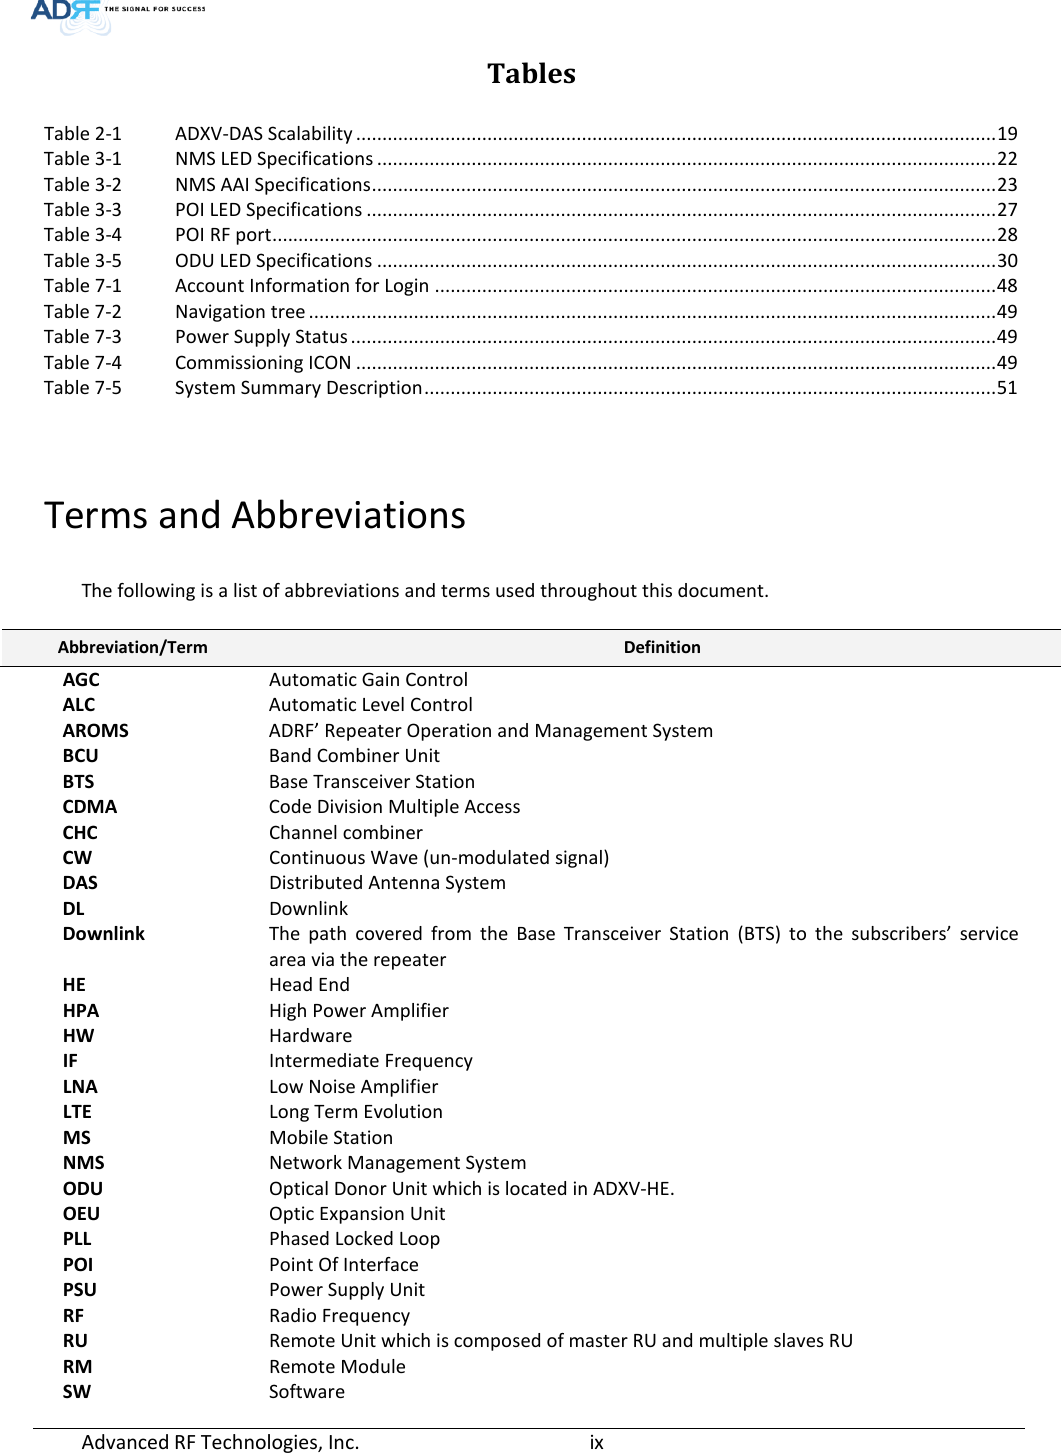 Page 9 of ADRF KOREA ADXV-R-336 DAS (Distributed Antenna System) User Manual ADXV DAS